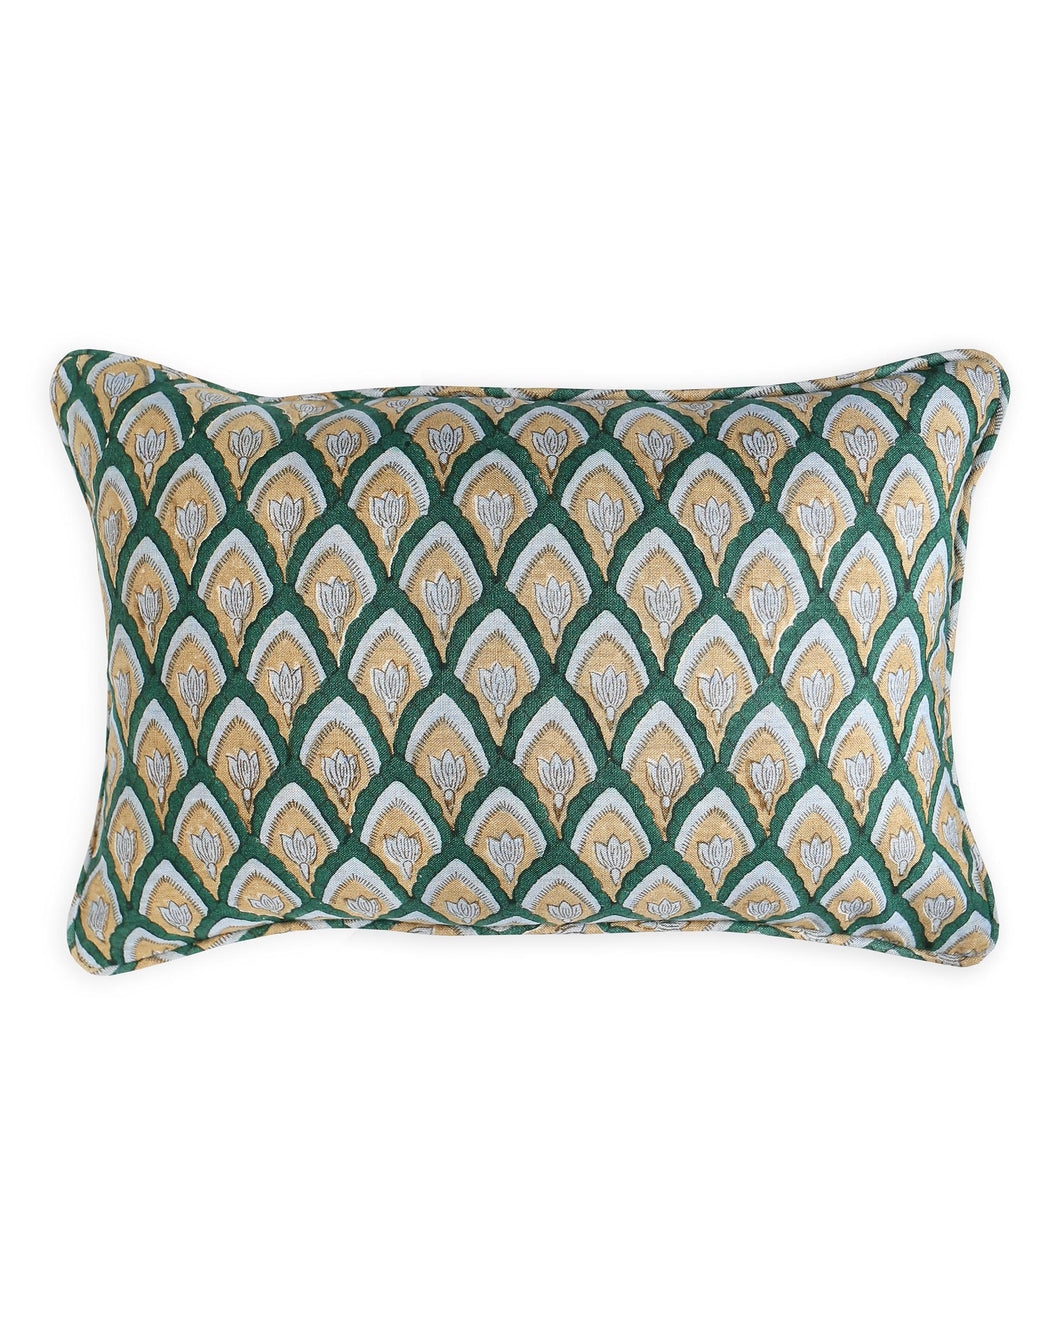 Haveli Byzantine Pillow, 12